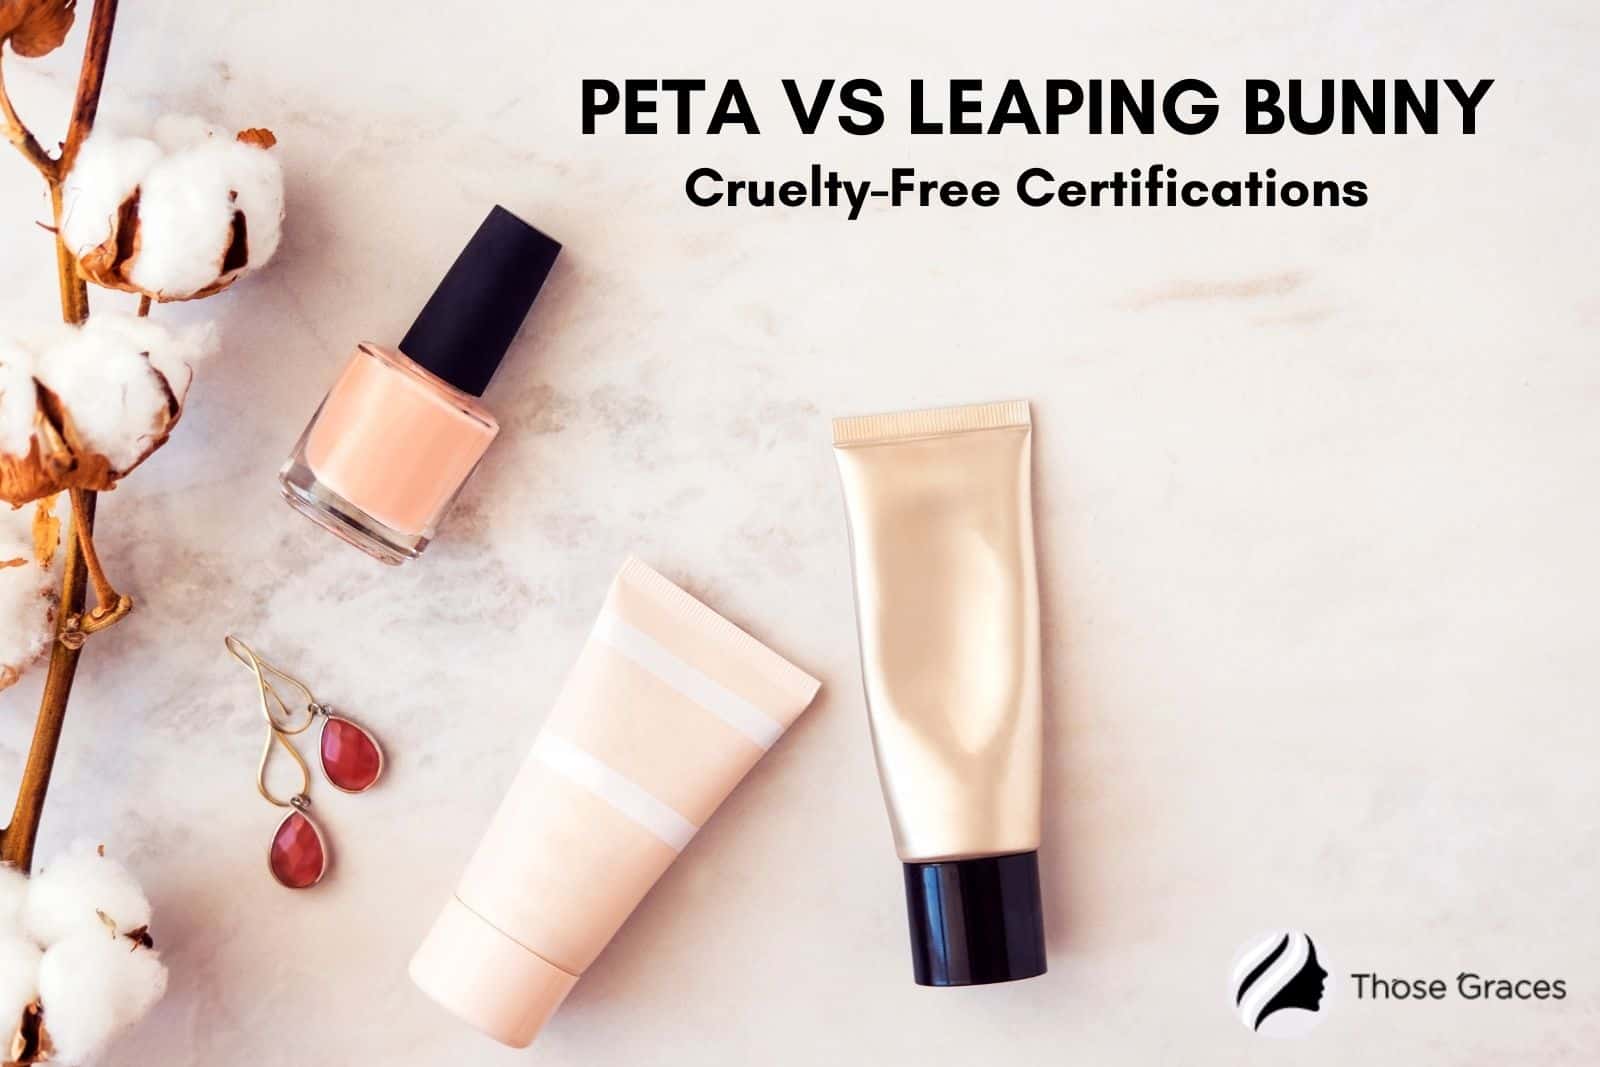 PETA vs leaping bunny certifications